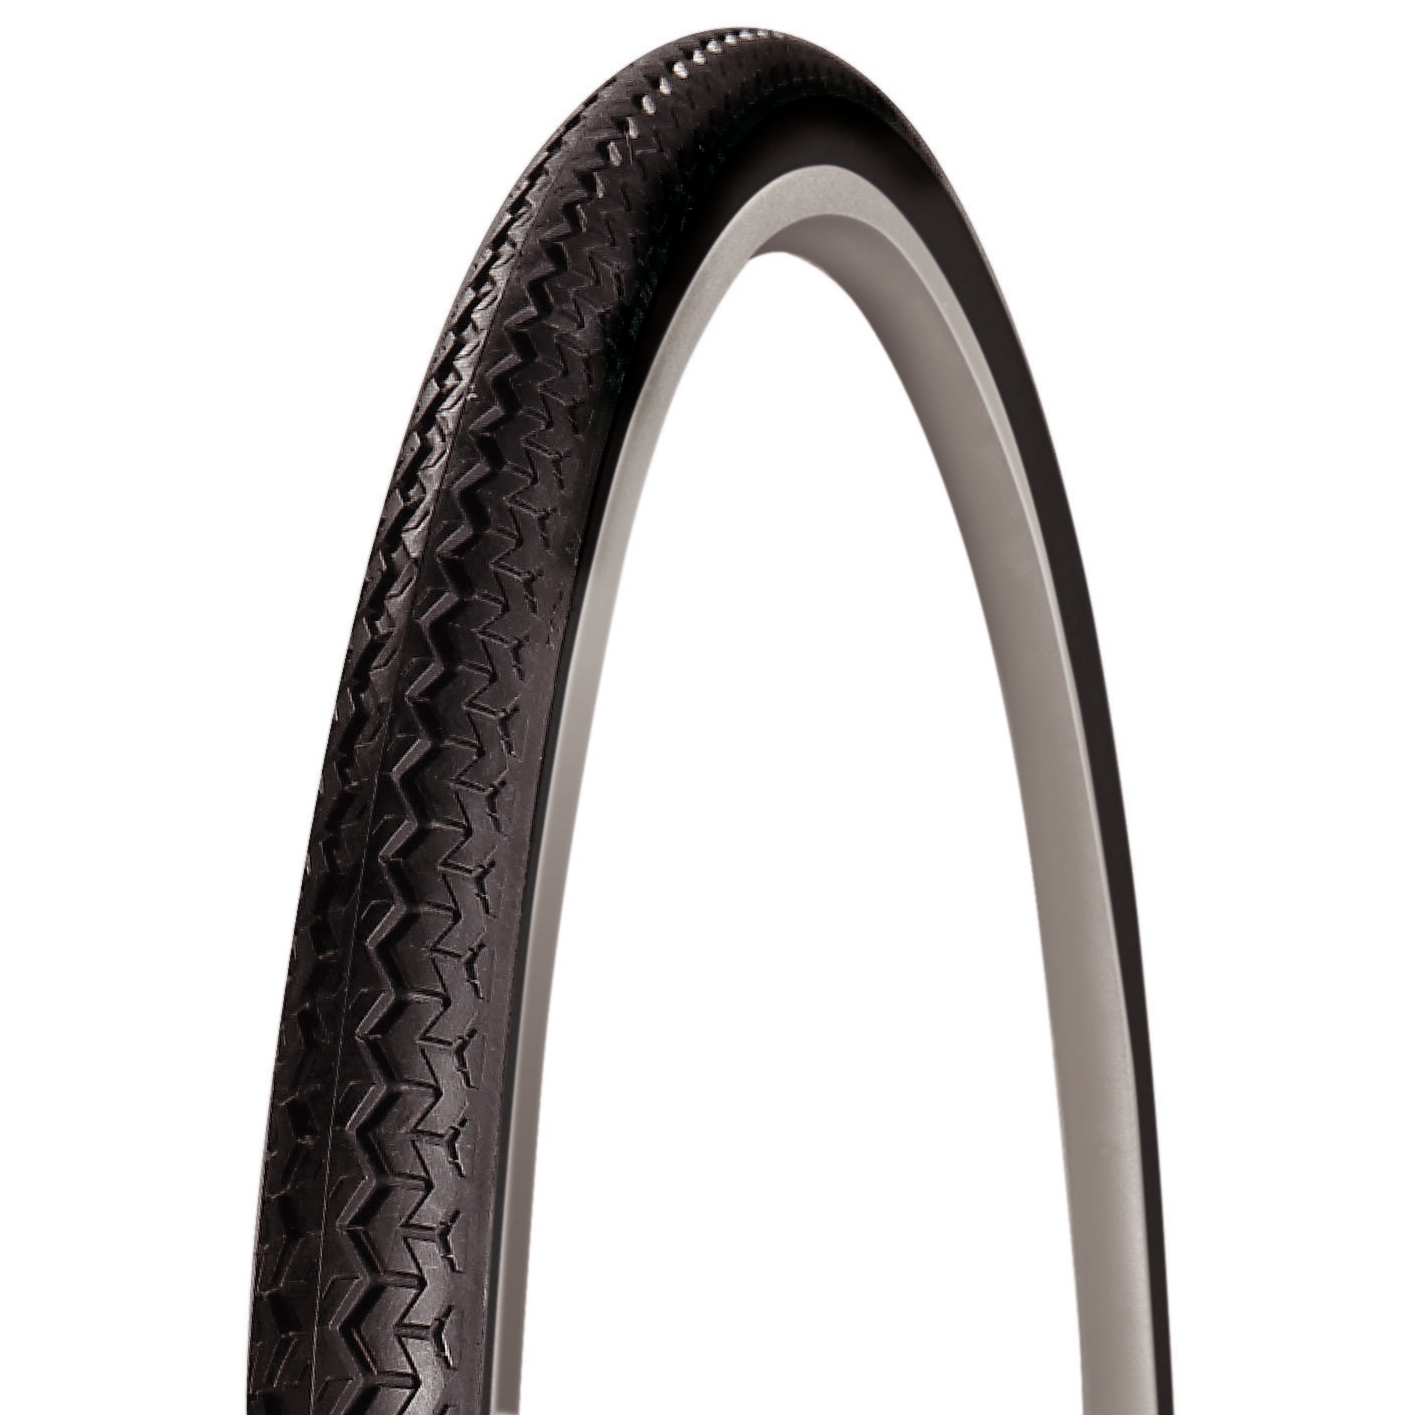 MICHELIN Cubierta neumático negra 650x35b World Tour para uso urbano - Michelin - Imagen 1 de 1